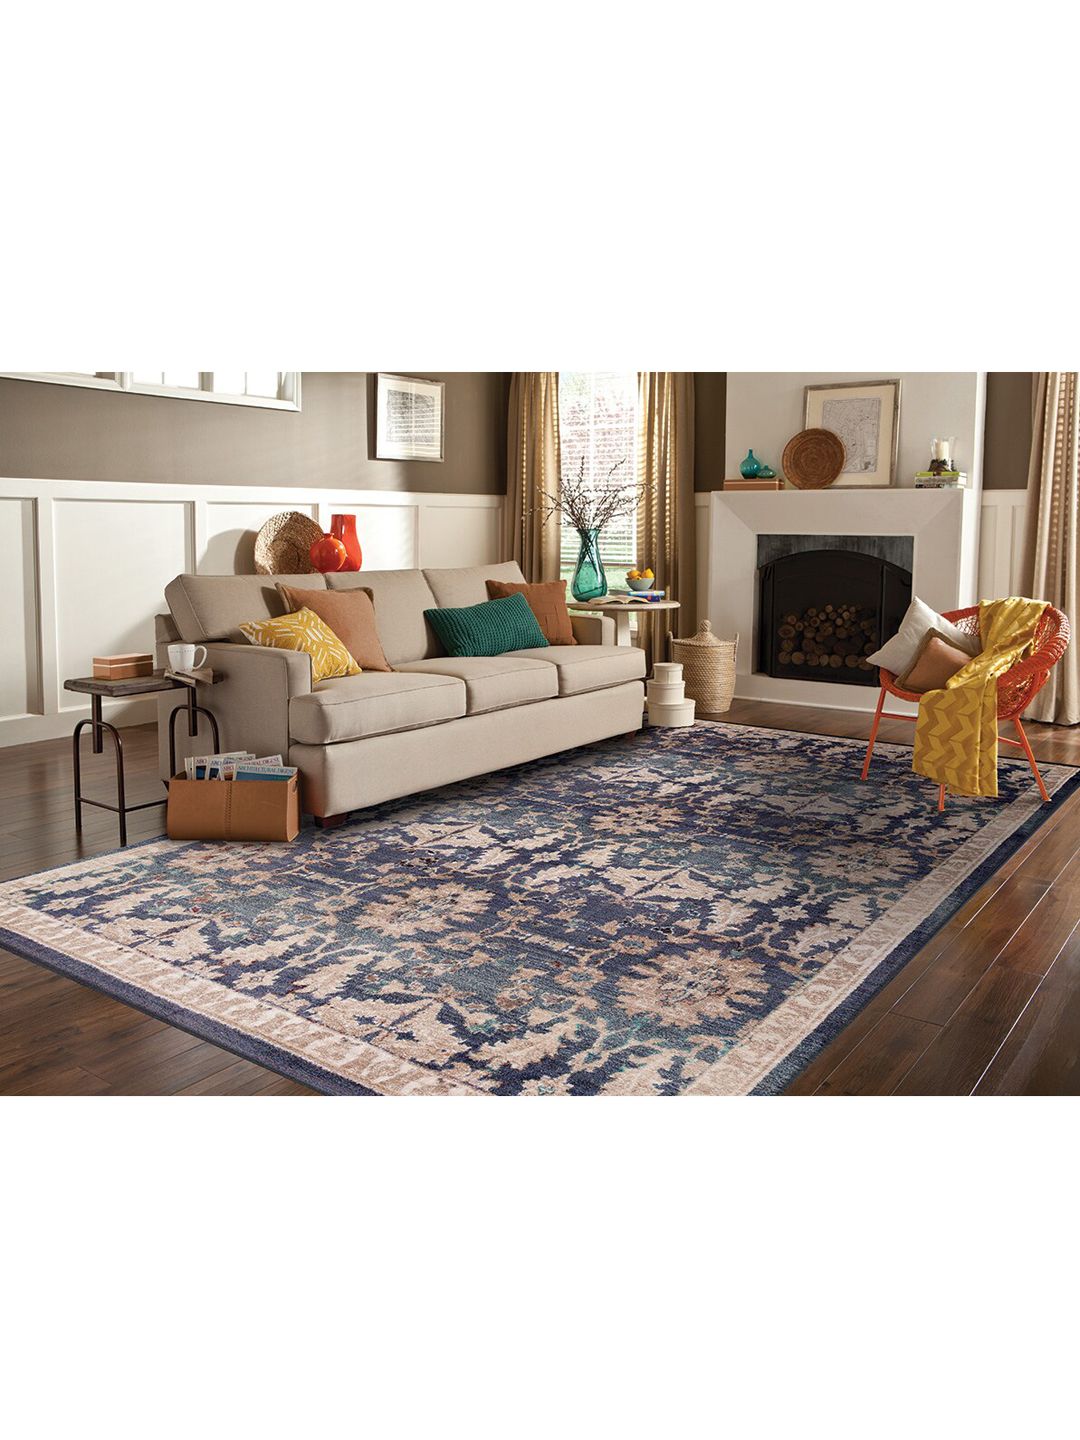 DDecor Blue & Beige Printed Floor Carpet Price in India